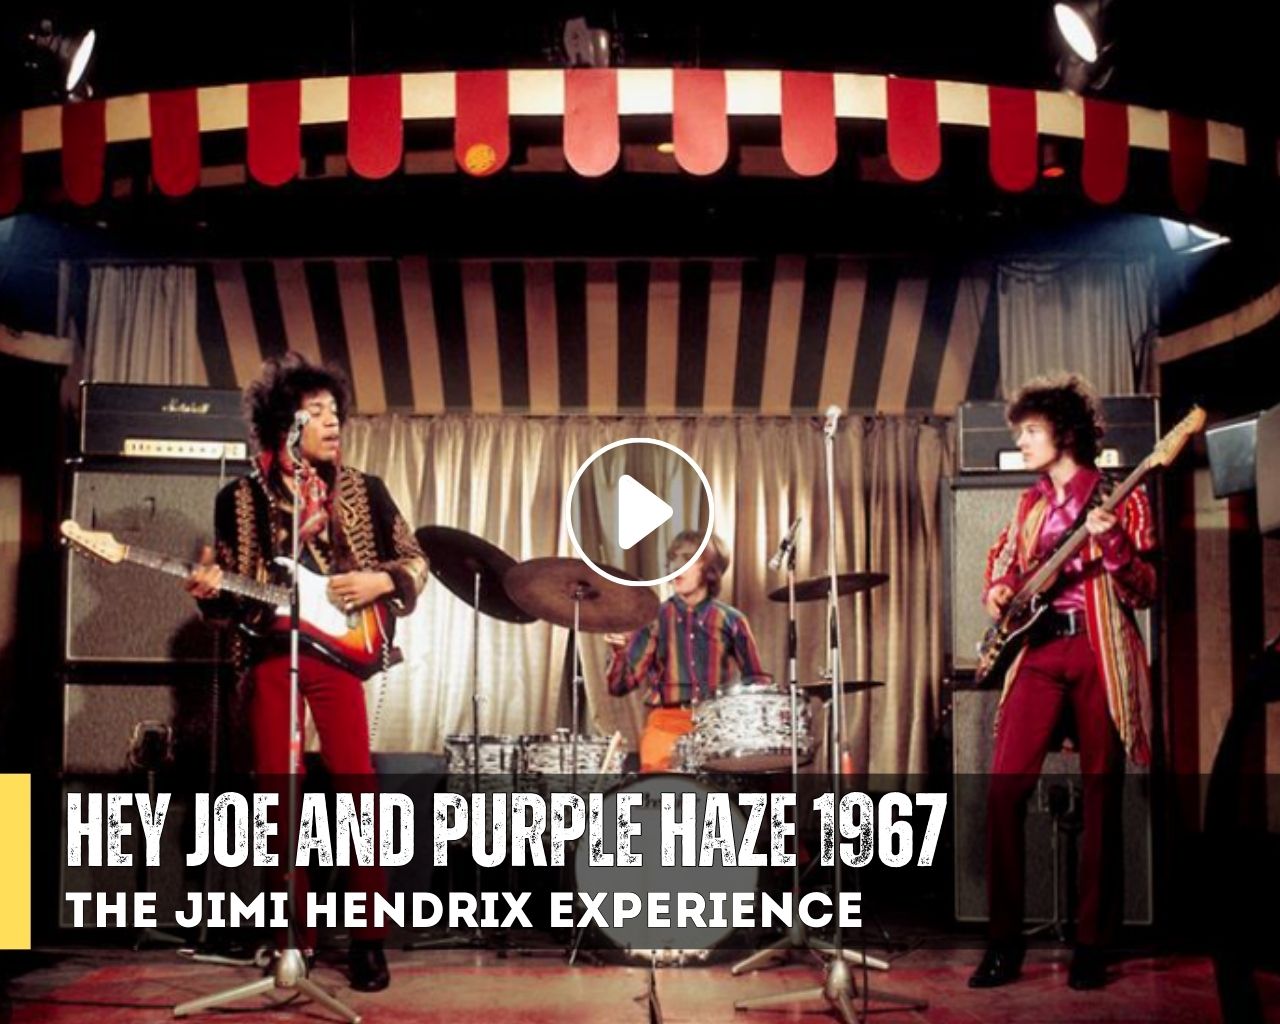 Hey Joe" and "Purple Haze The Jimi Hendrix Experience